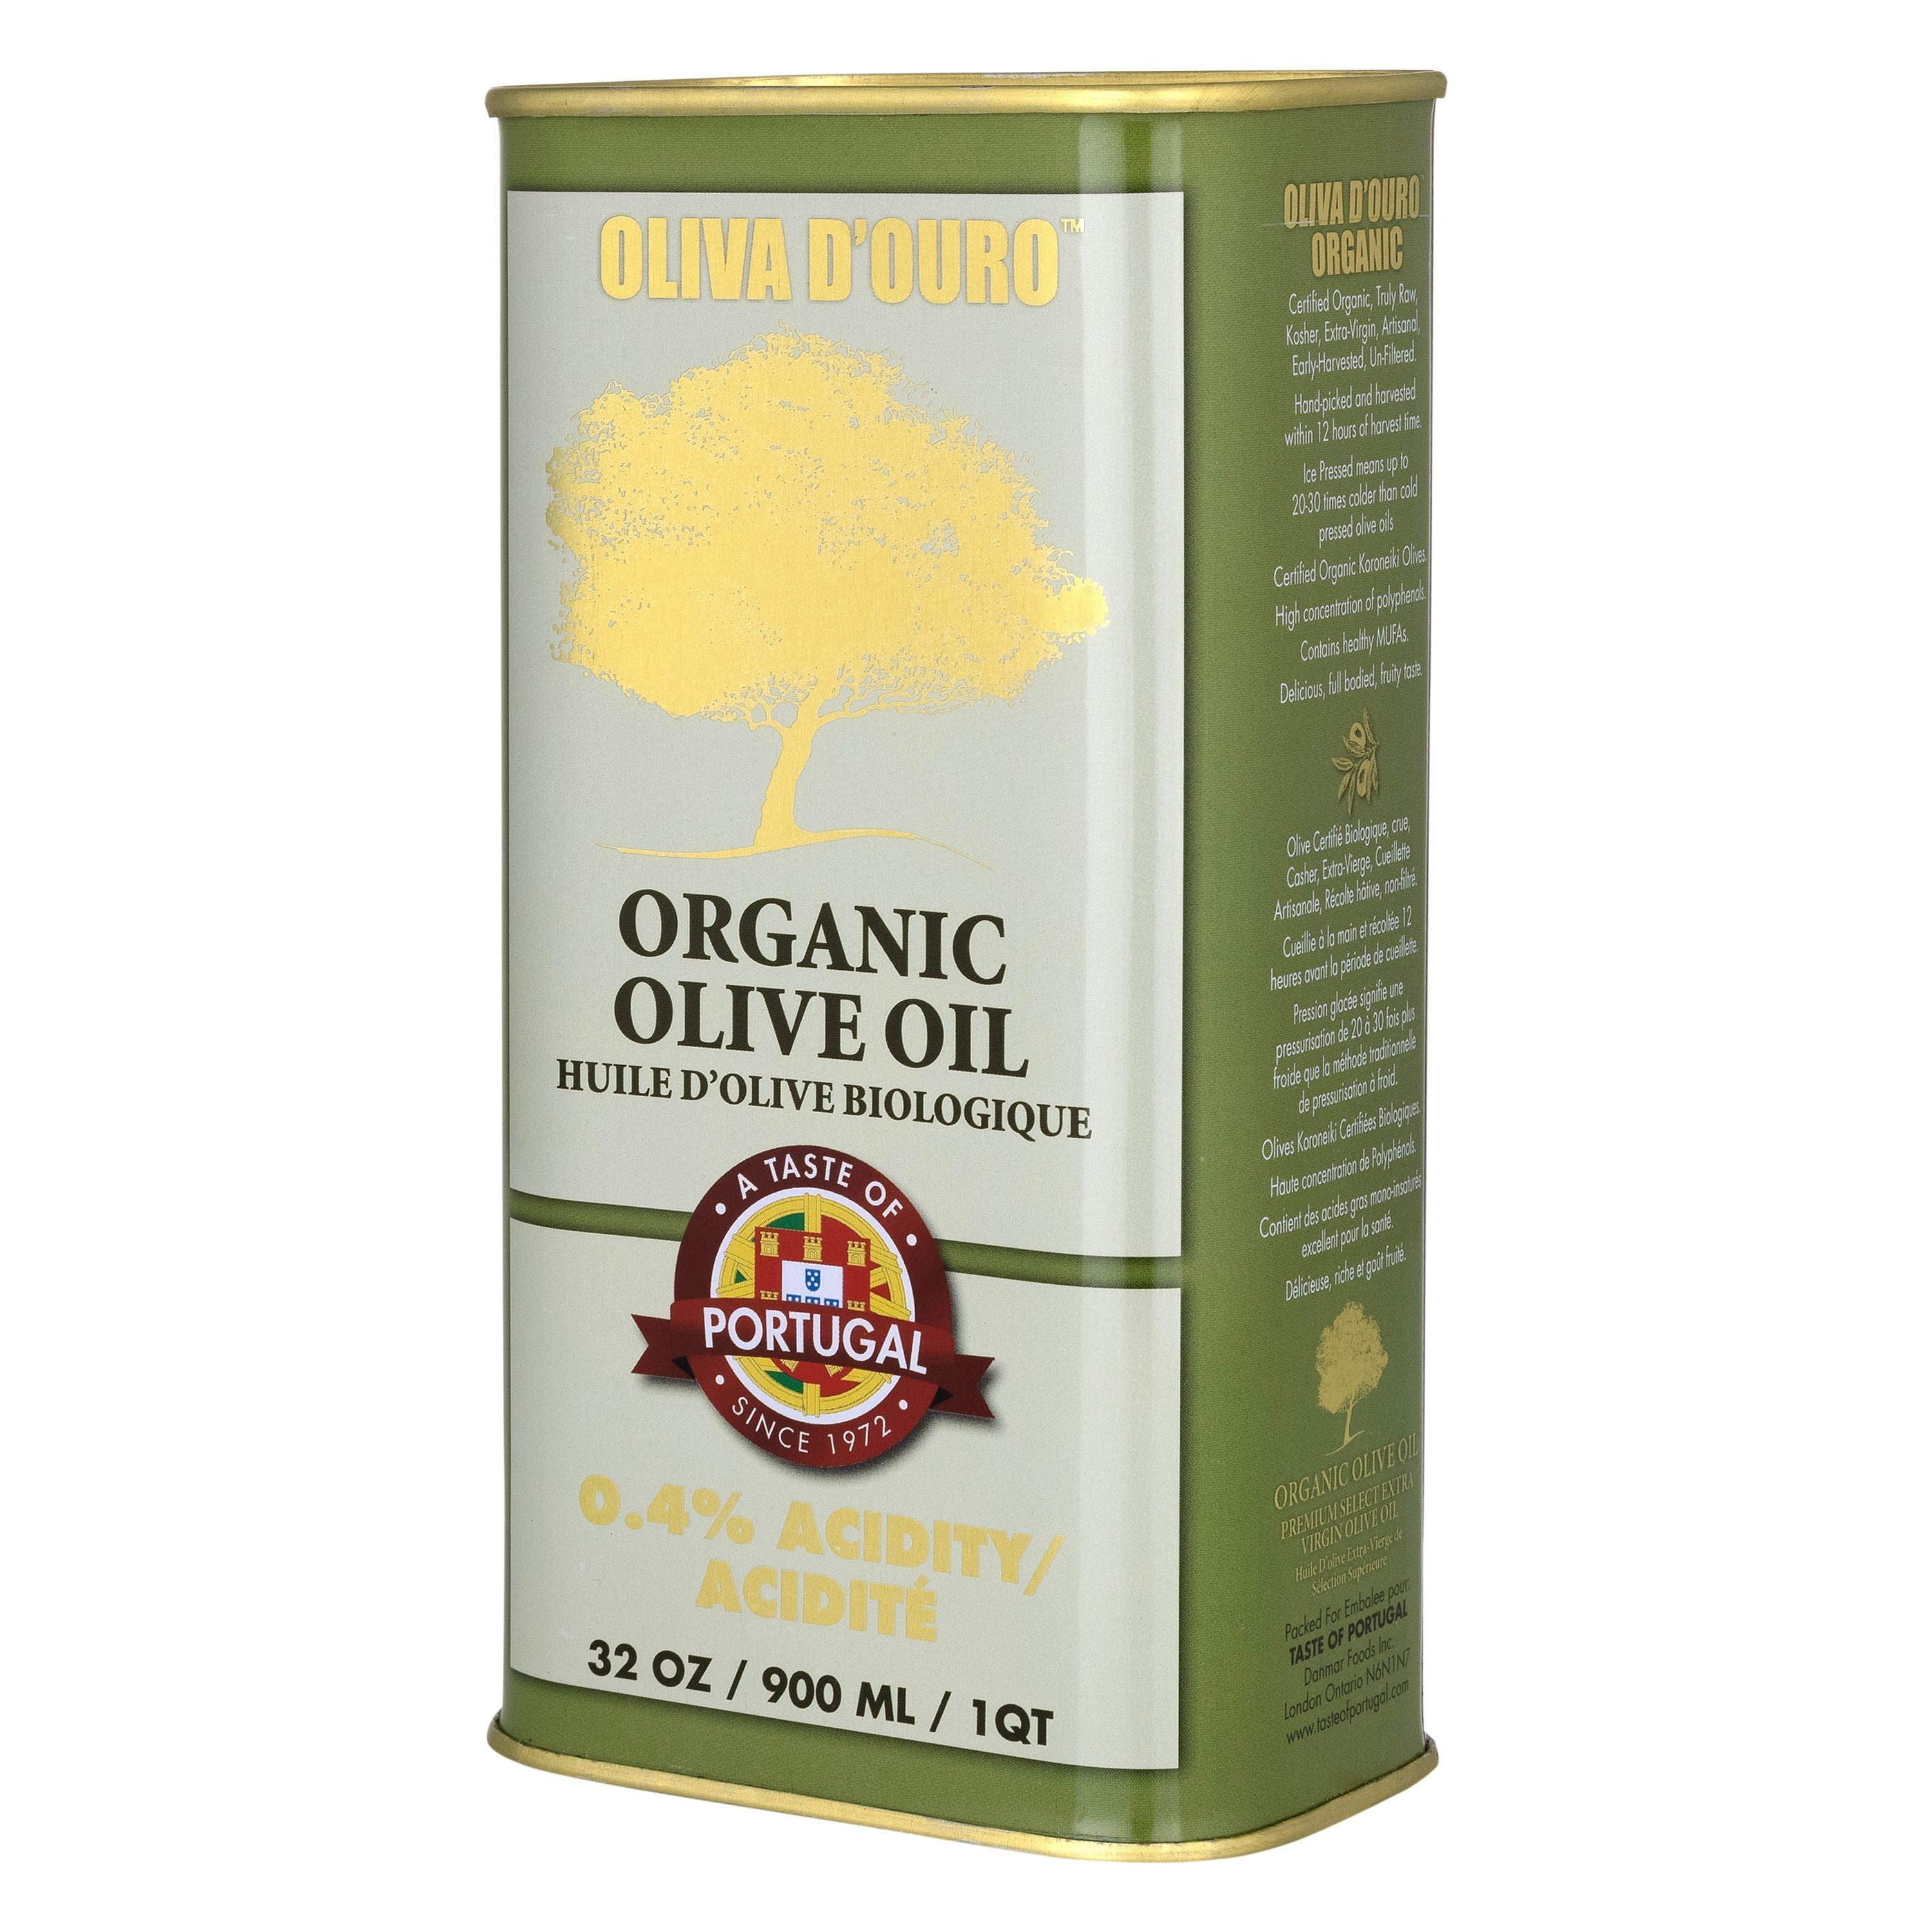 Organic Portuguese Extra Virgin Olive Oil 0.4% (900ml | 30.4oz)